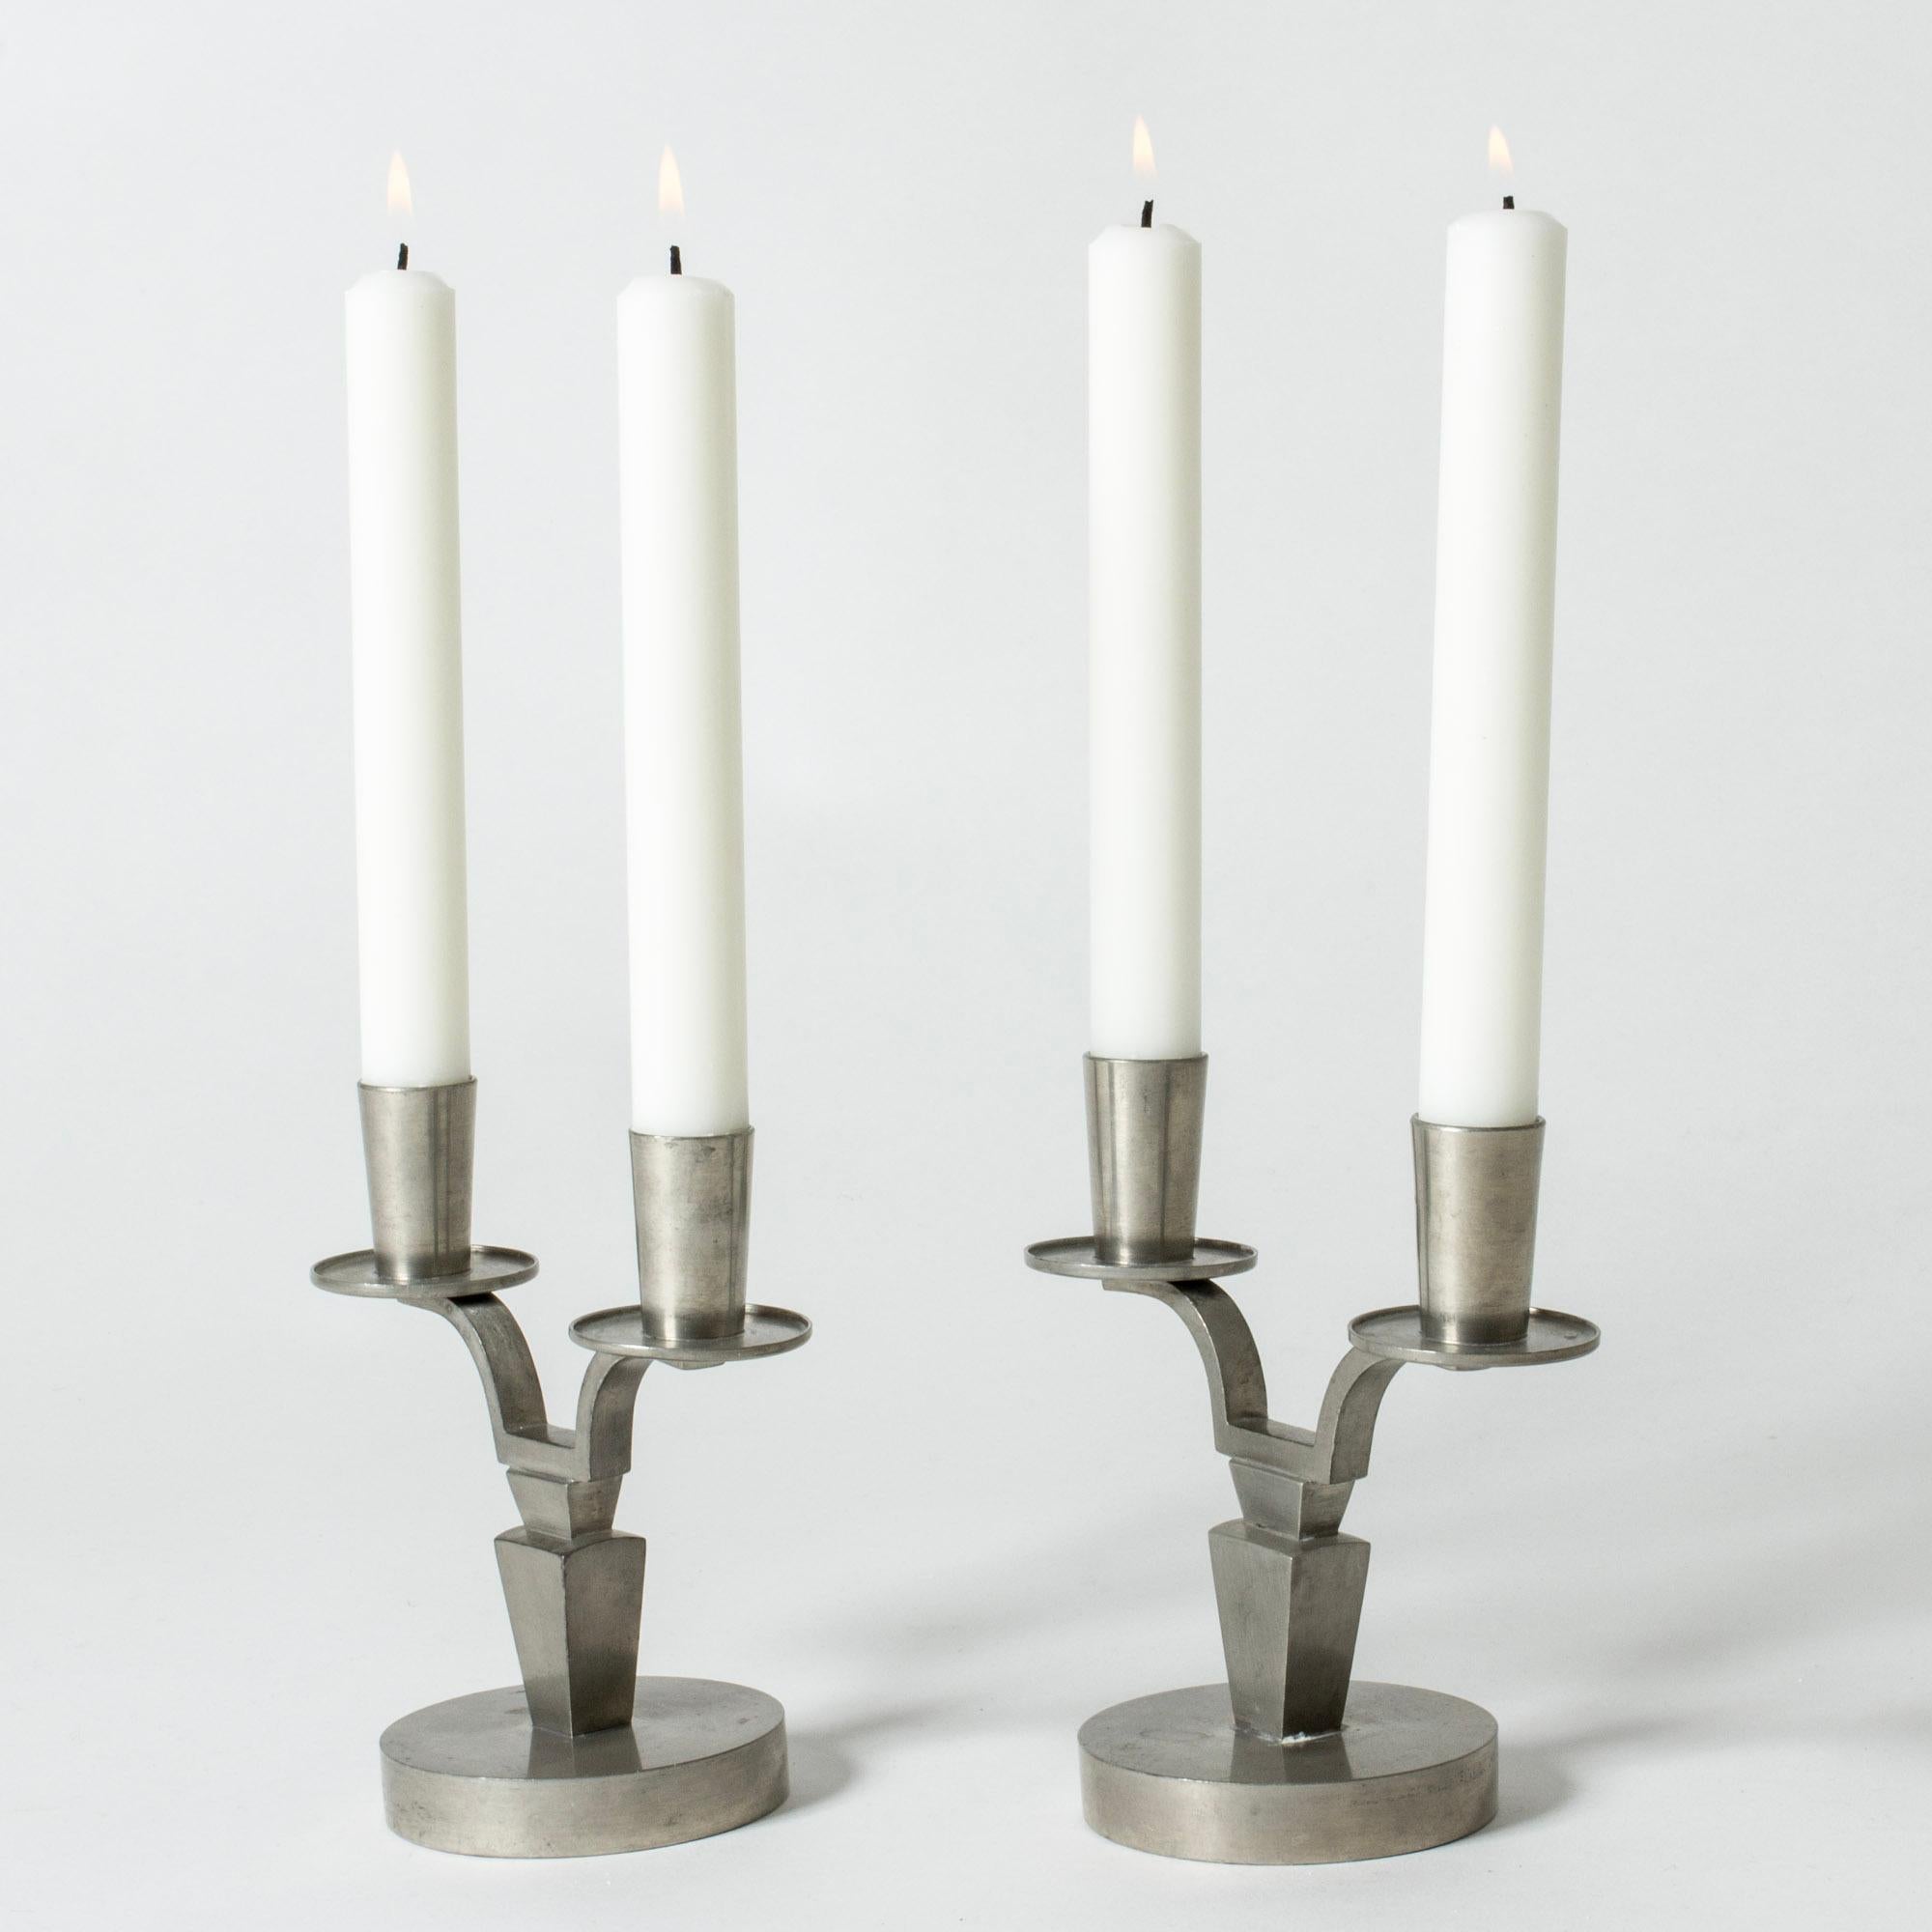 Scandinavian Modern Modernist Pewter Candlesticks by Nils Fougstedt for Svenskt Tenn, Sweden, 1944